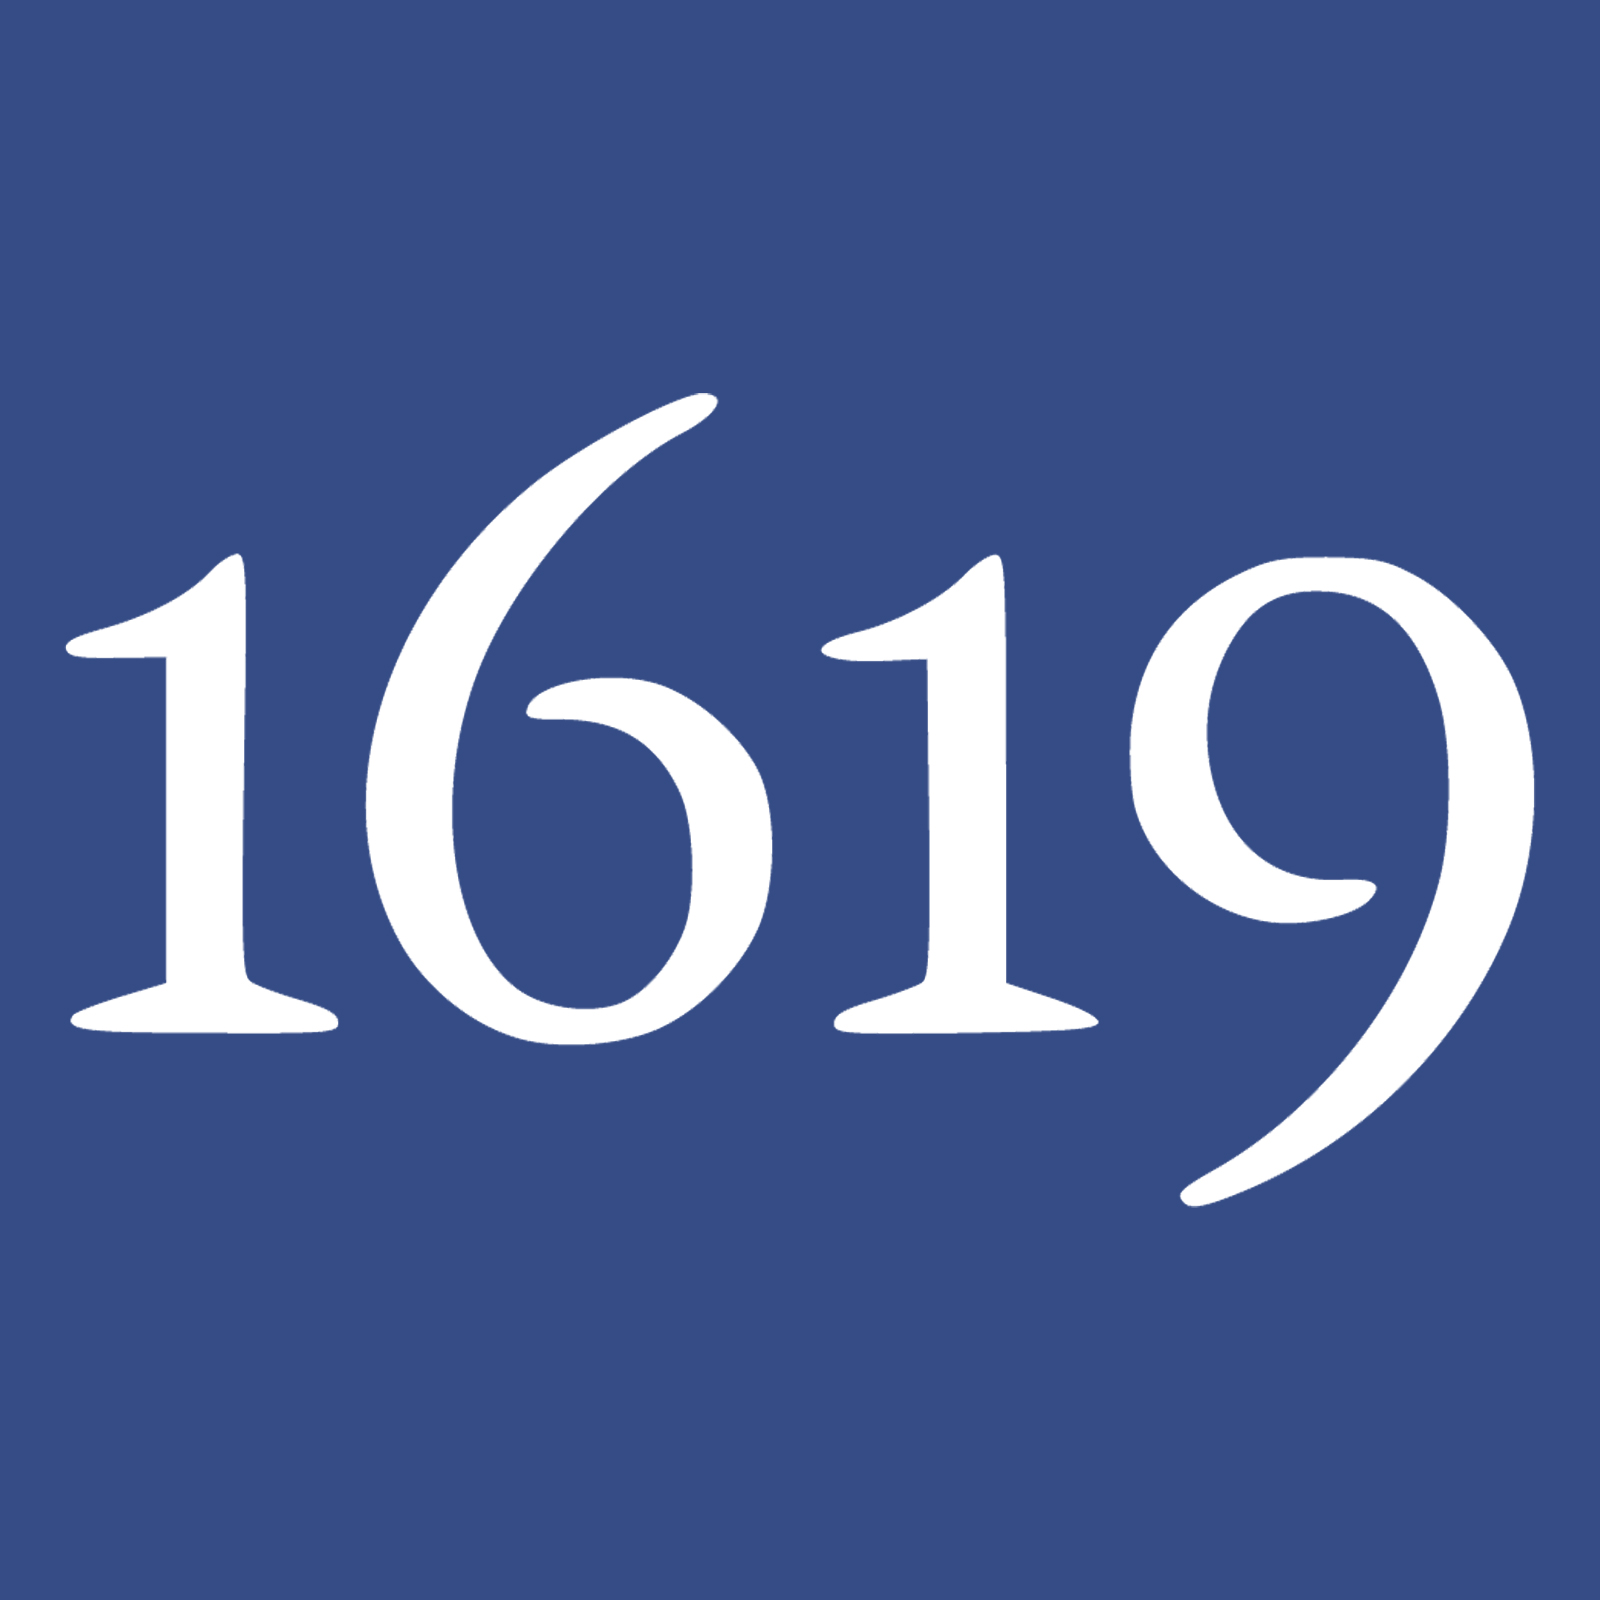 1619 Project logo